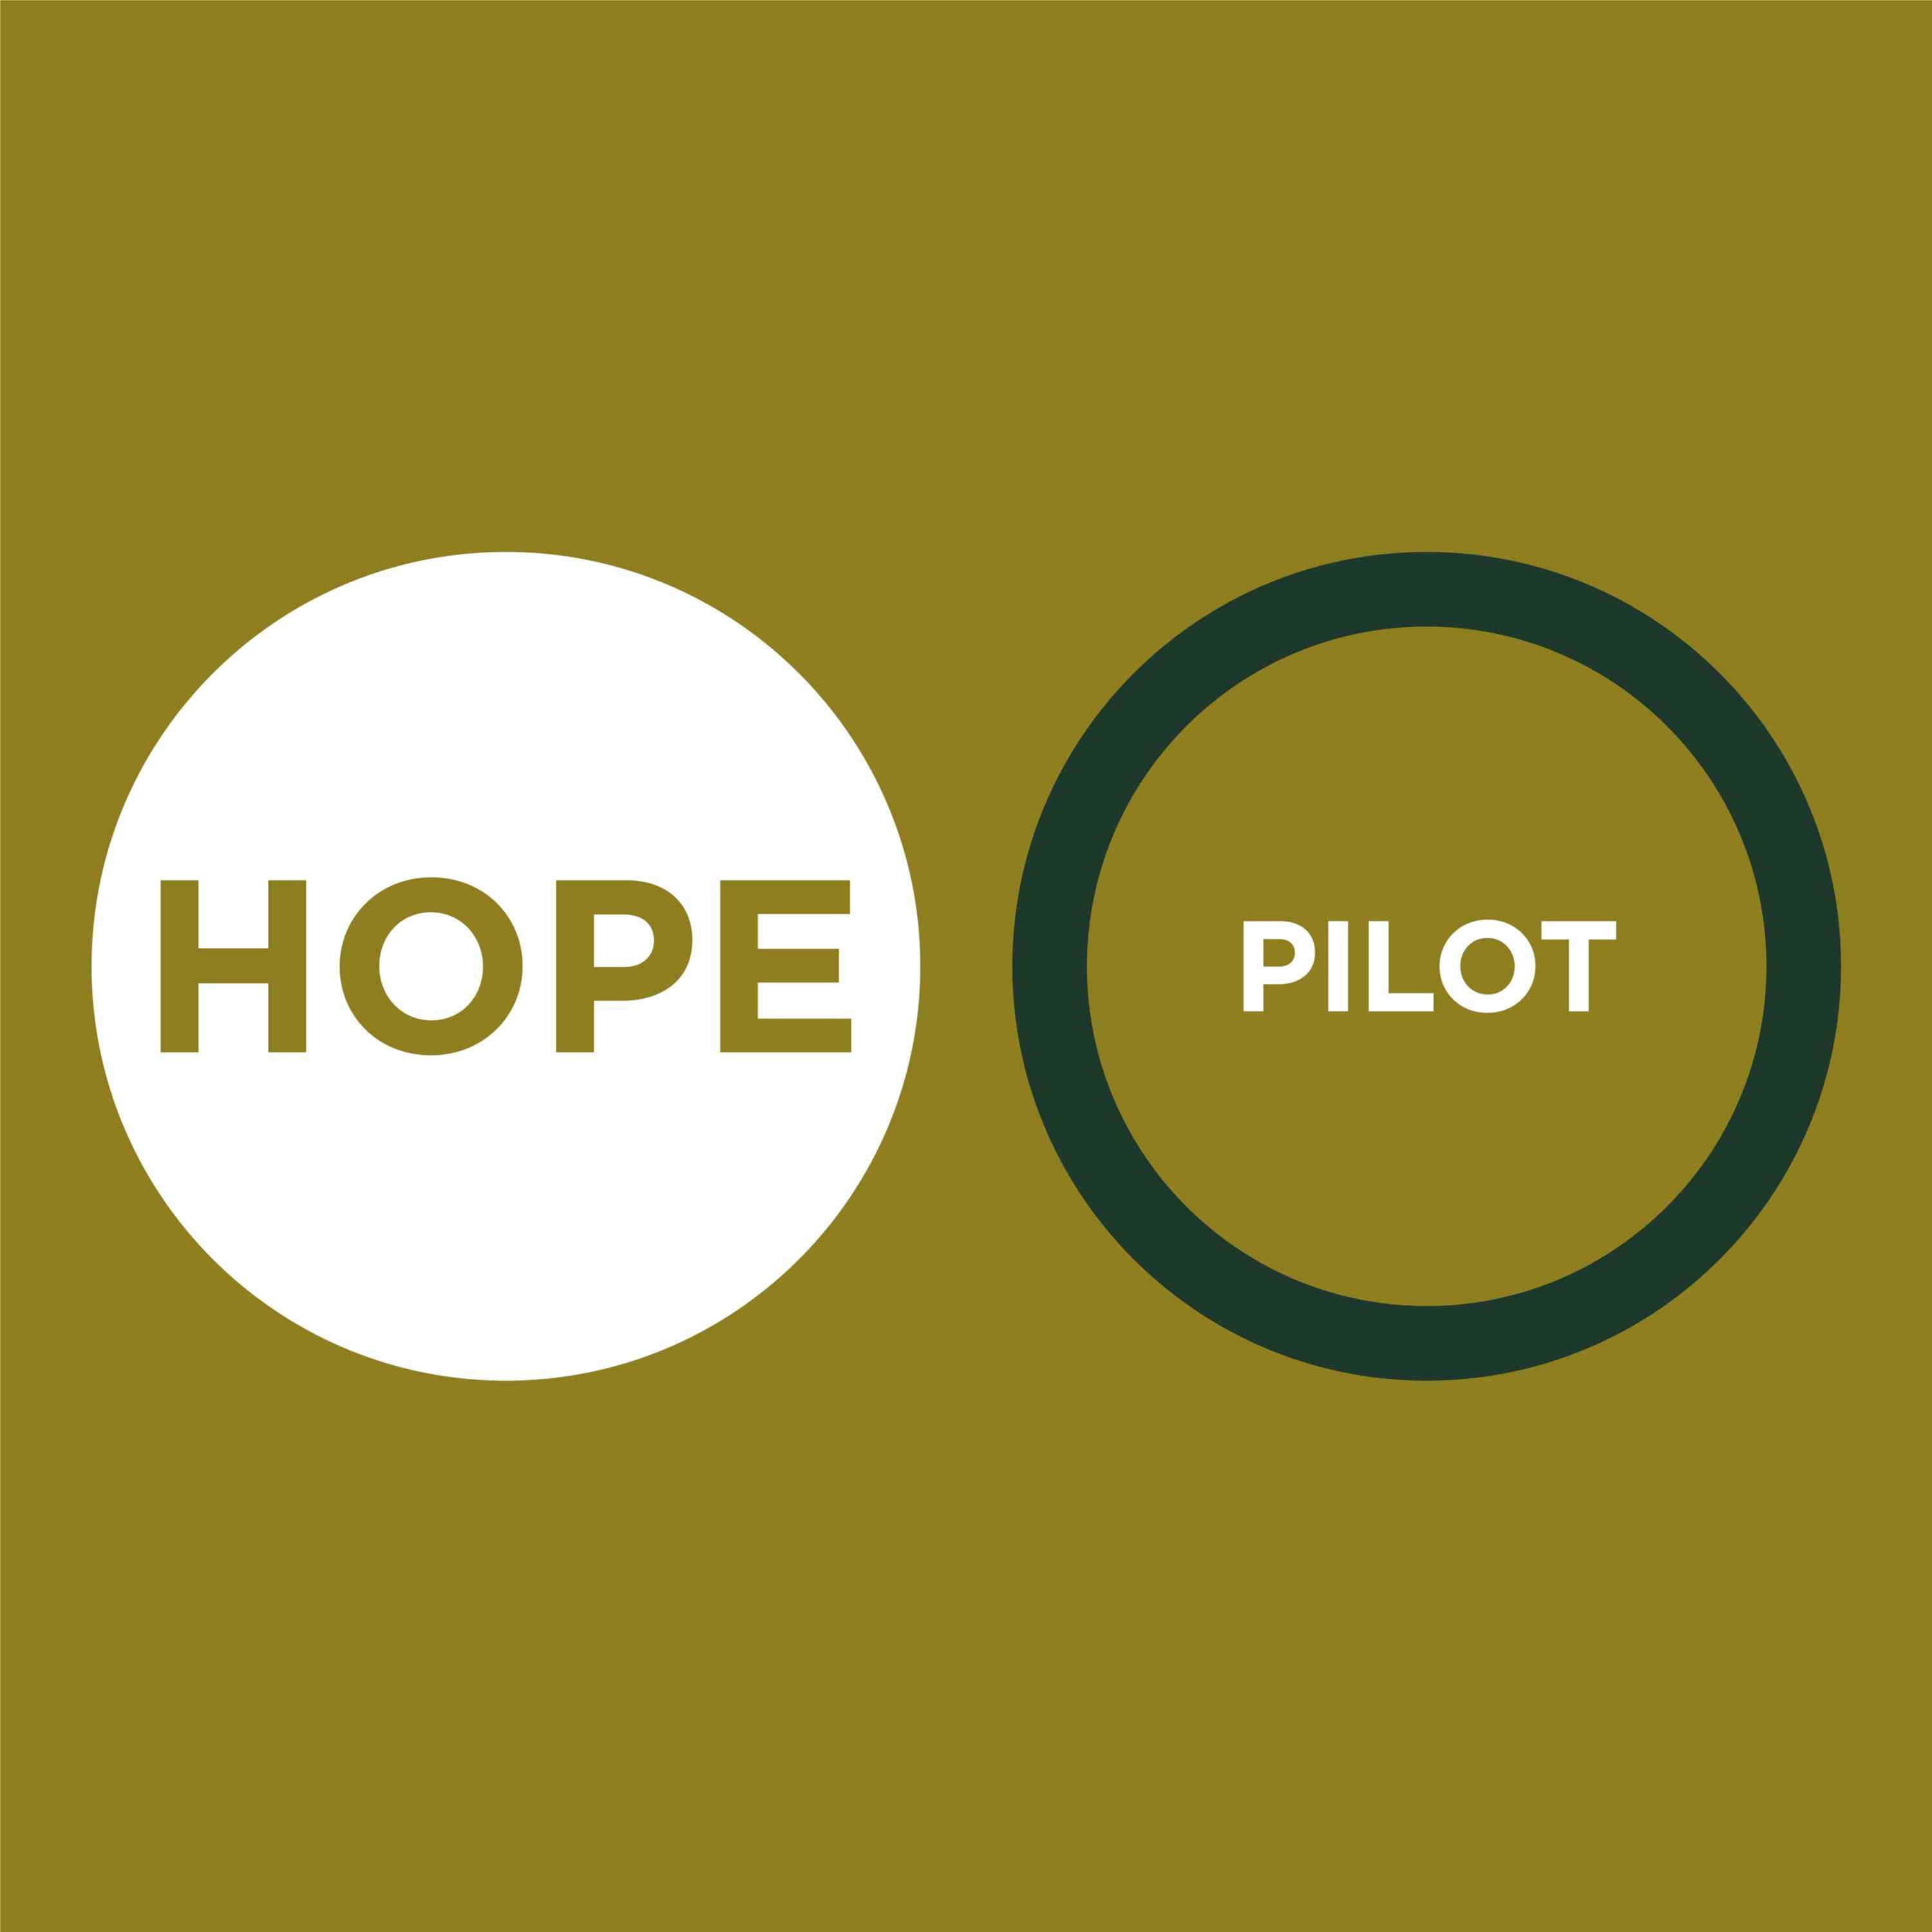 We Do Hope podcast – Pilot Episode Image